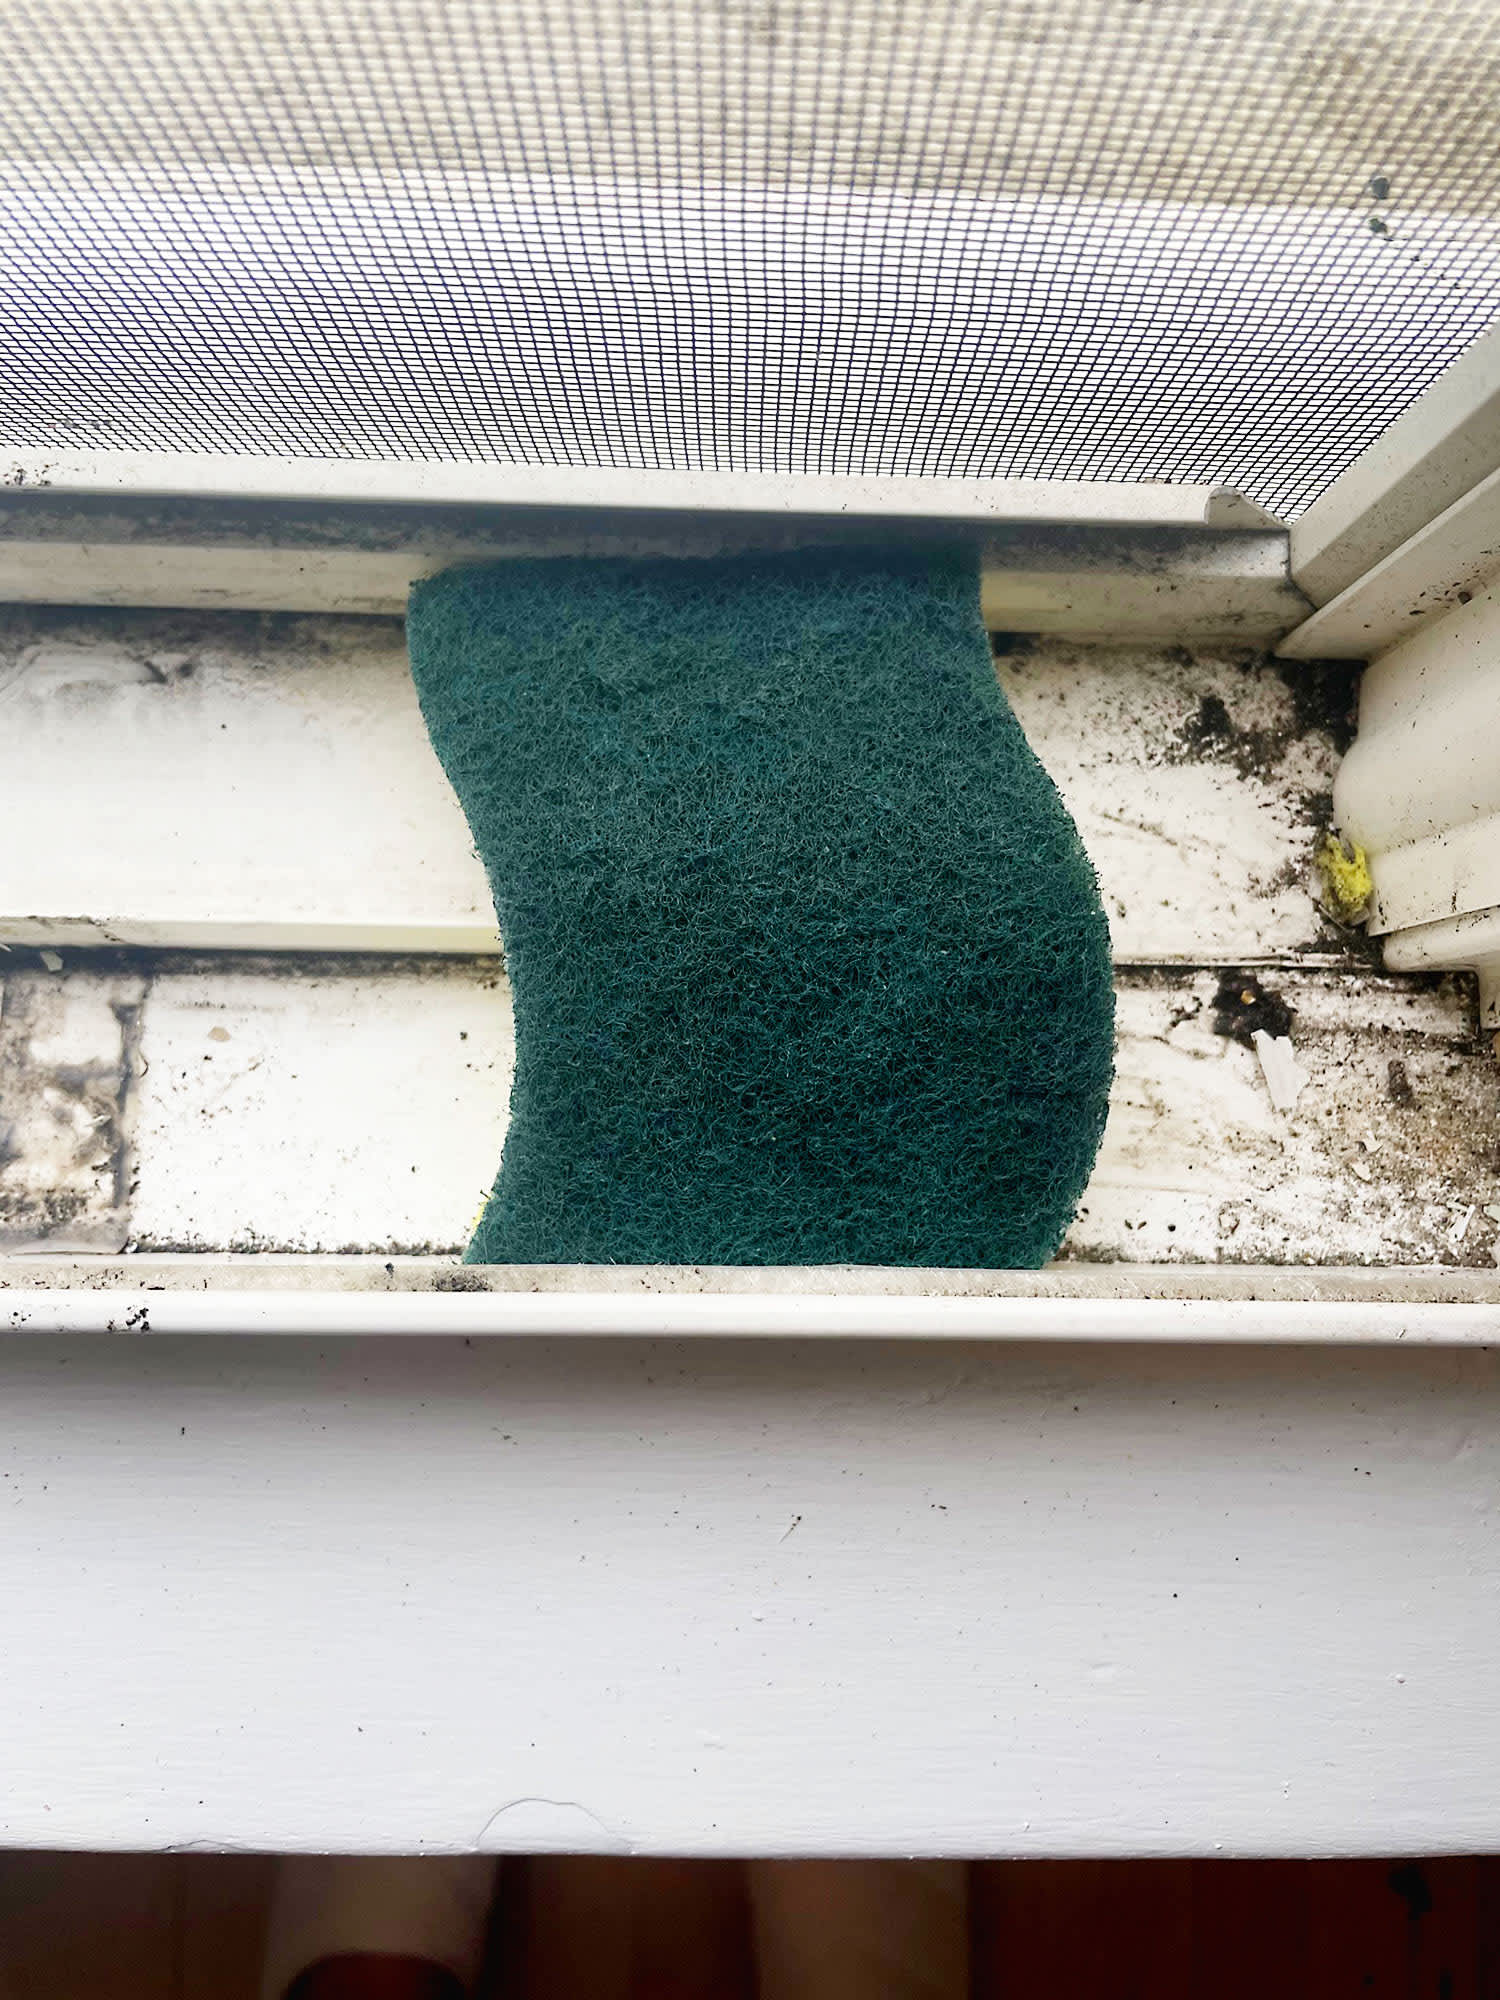 https://cdn.apartmenttherapy.info/image/upload/v1618505047/at/organize-clean/window-sponge-5.jpg